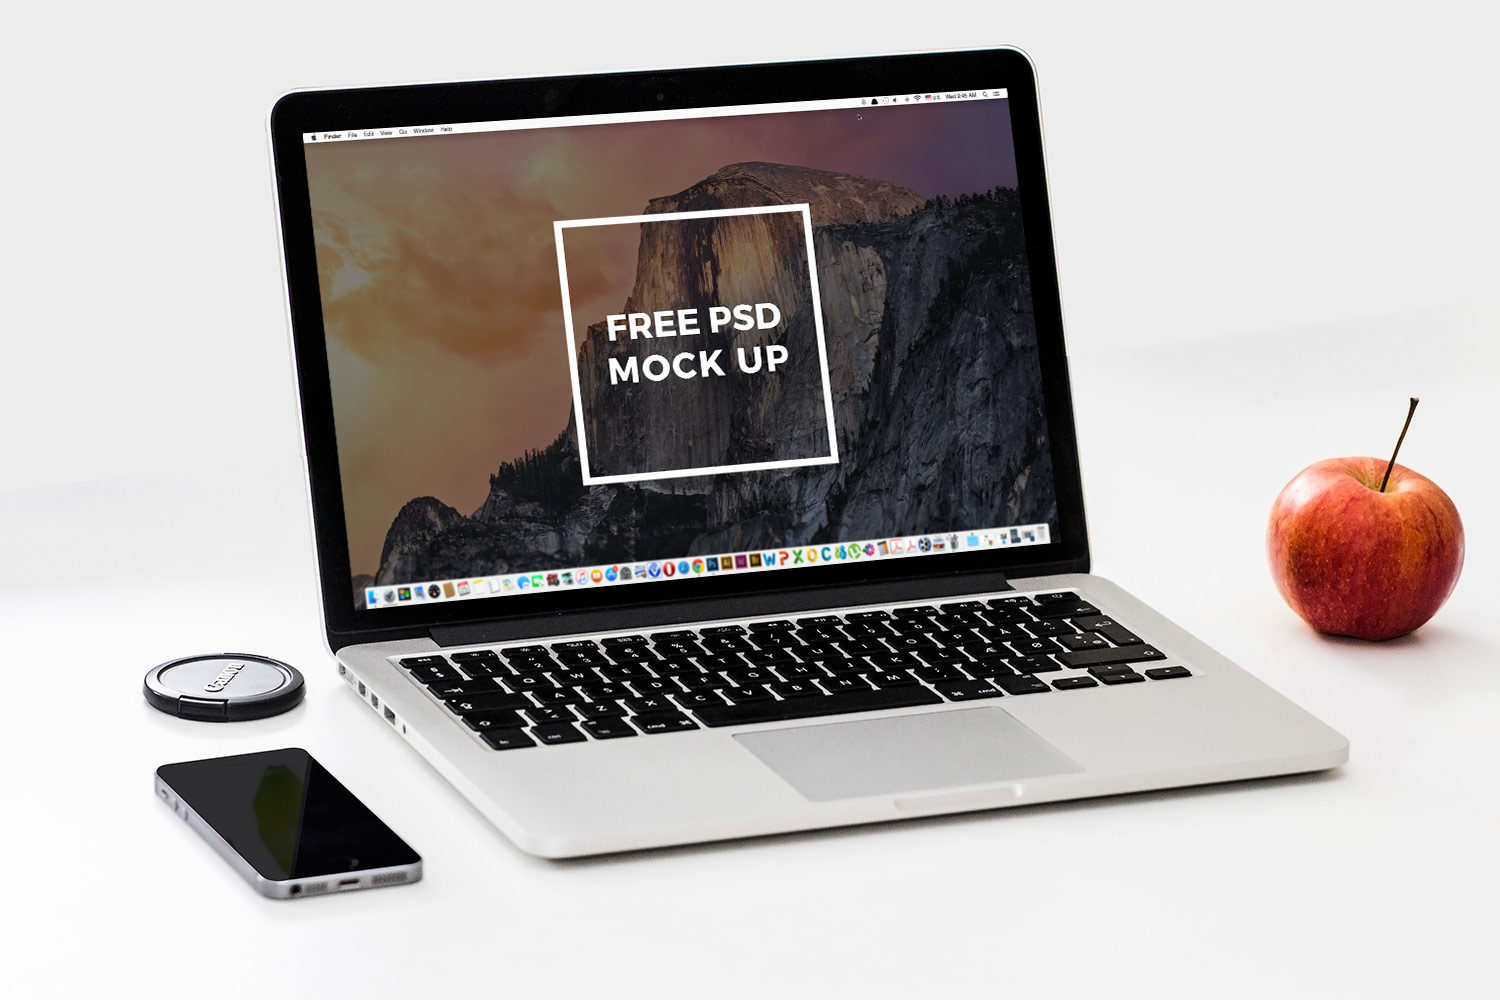 Download Macbook Pro - 2 Free PSD Mockups | Free Mockup